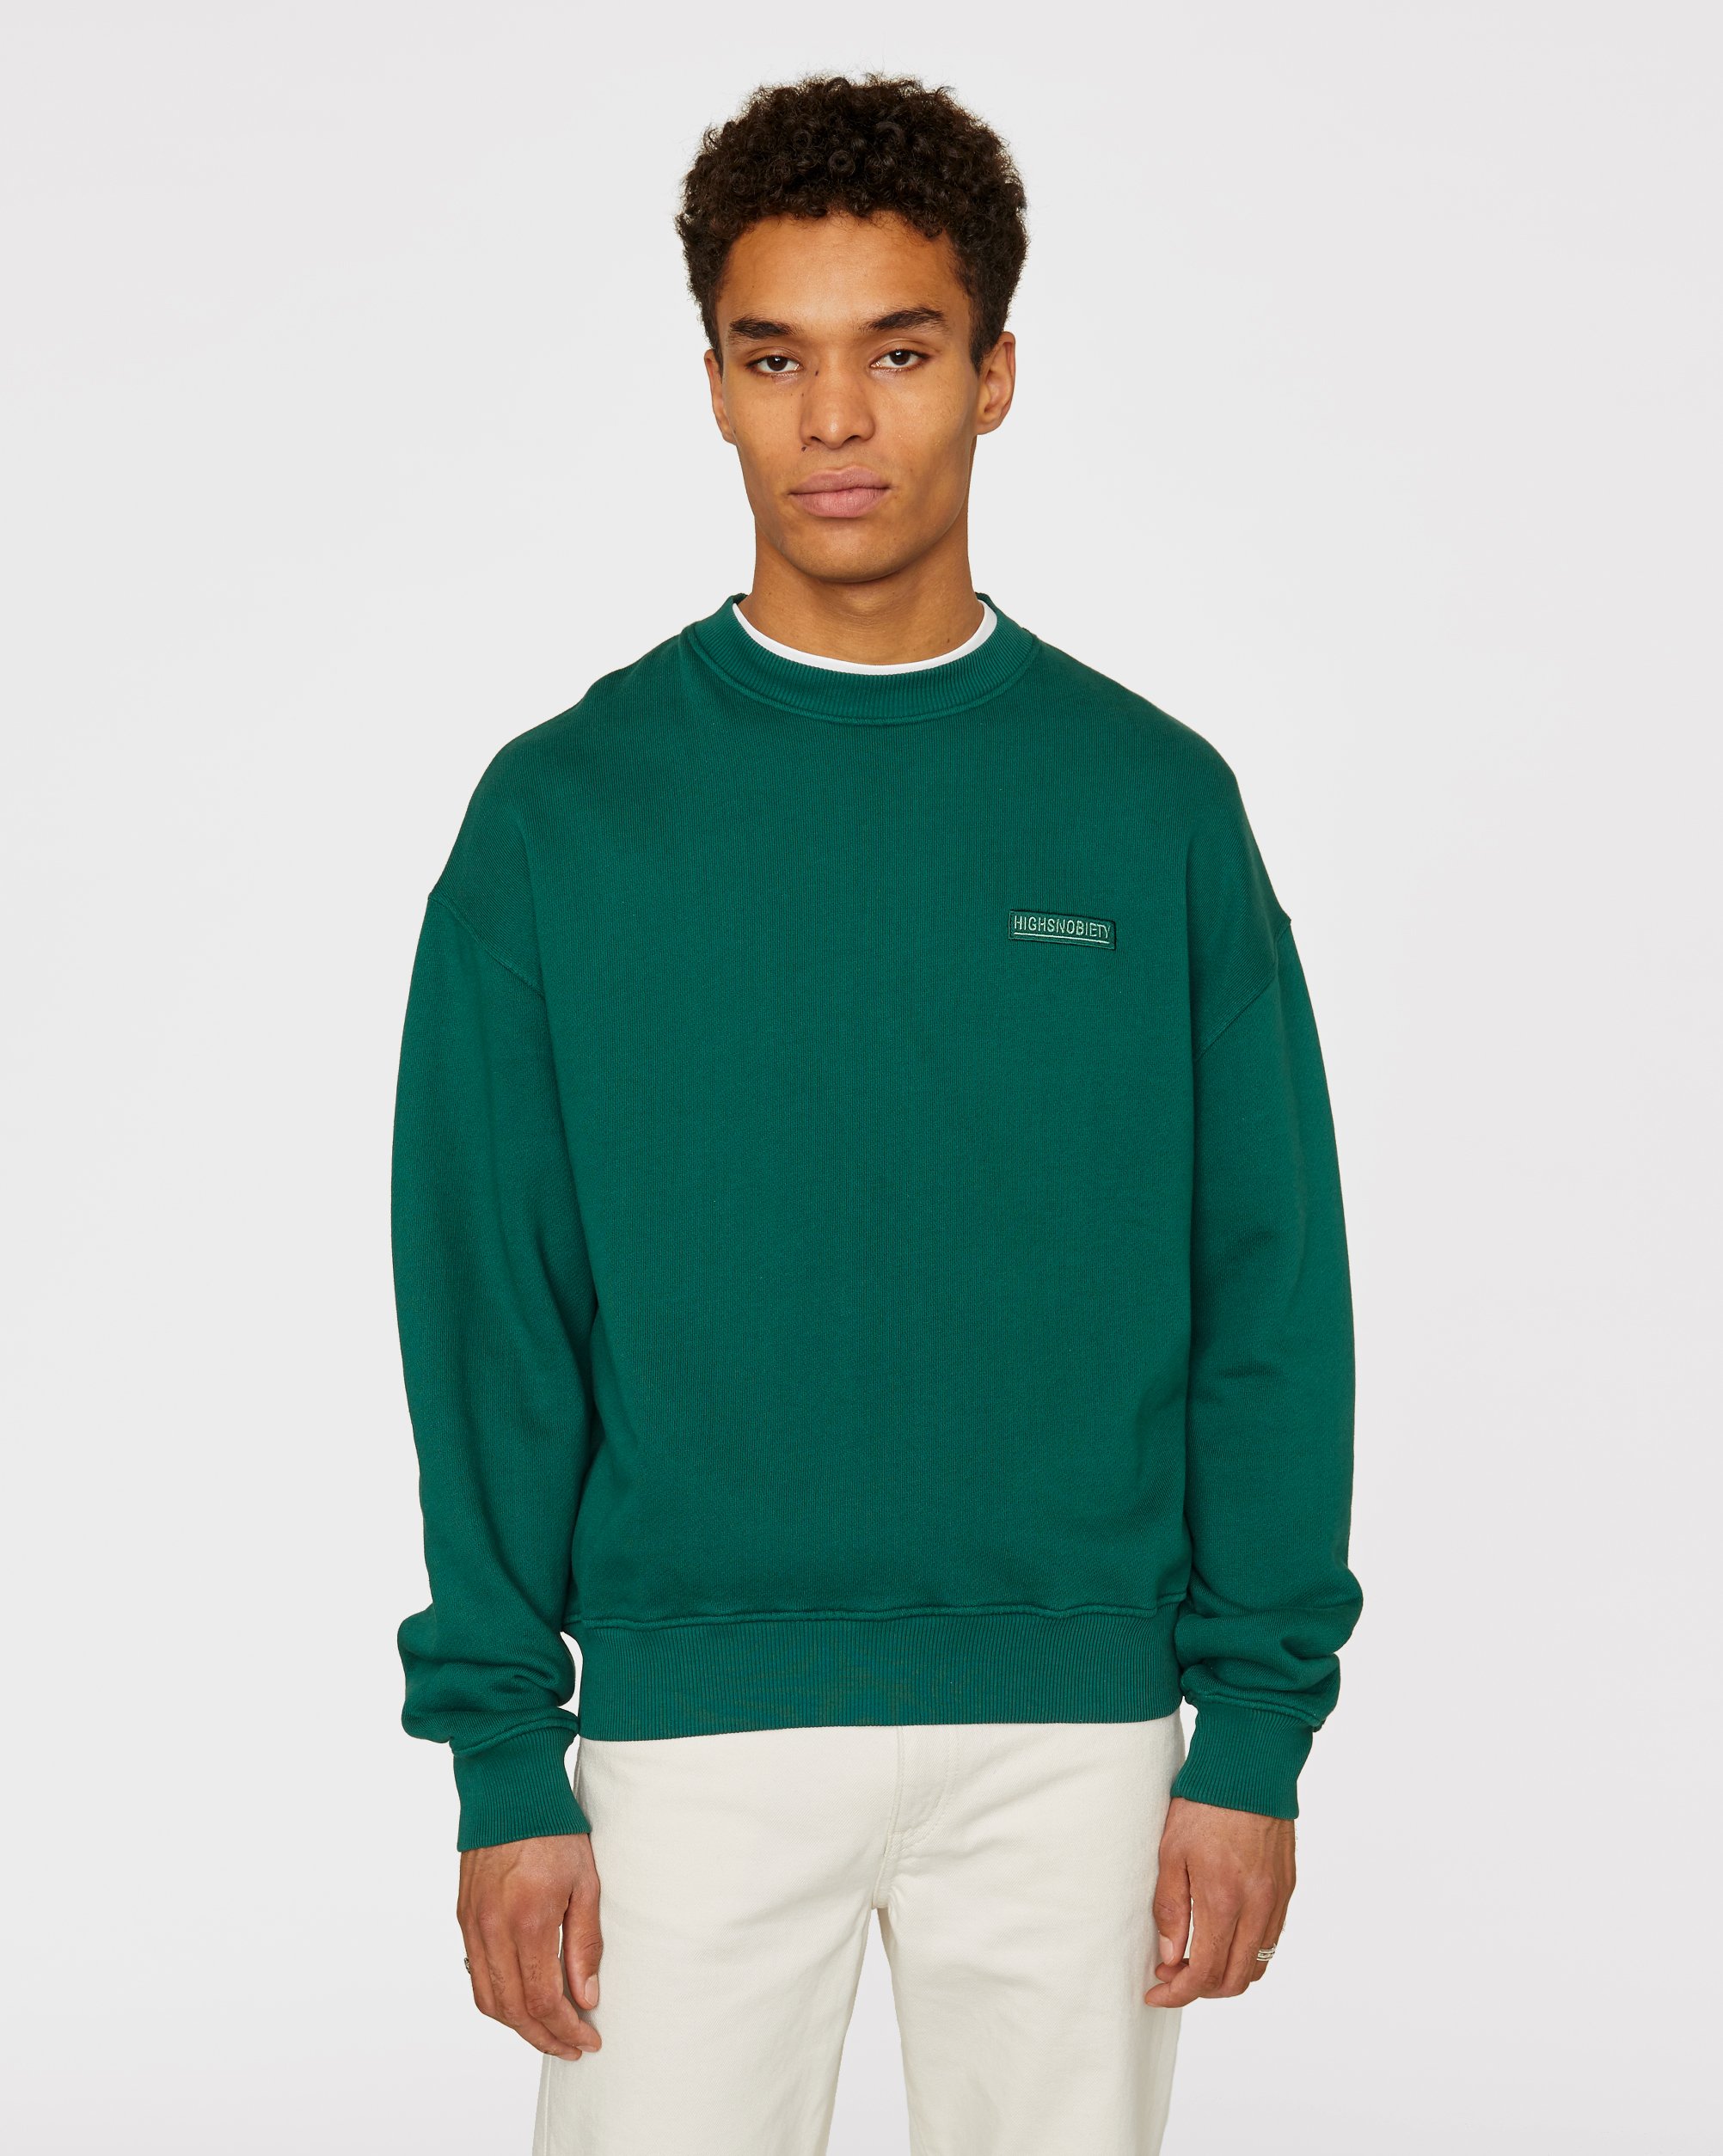 Highsnobiety - Staples Sweatshirt Green - Clothing - Green - Image 2